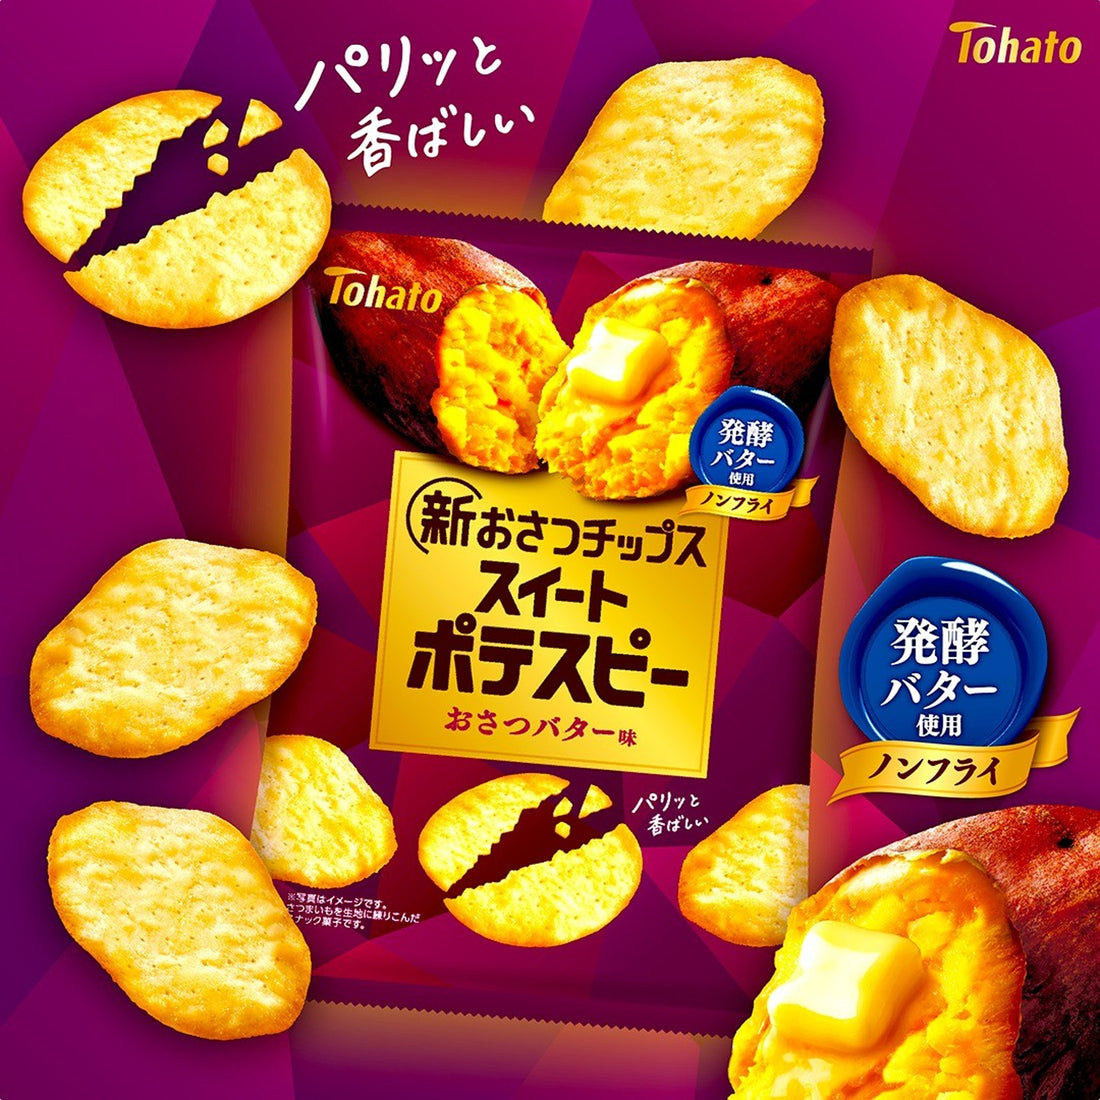 Tohato Sweet Potato Pea Osatsu Butter Flavor 50g